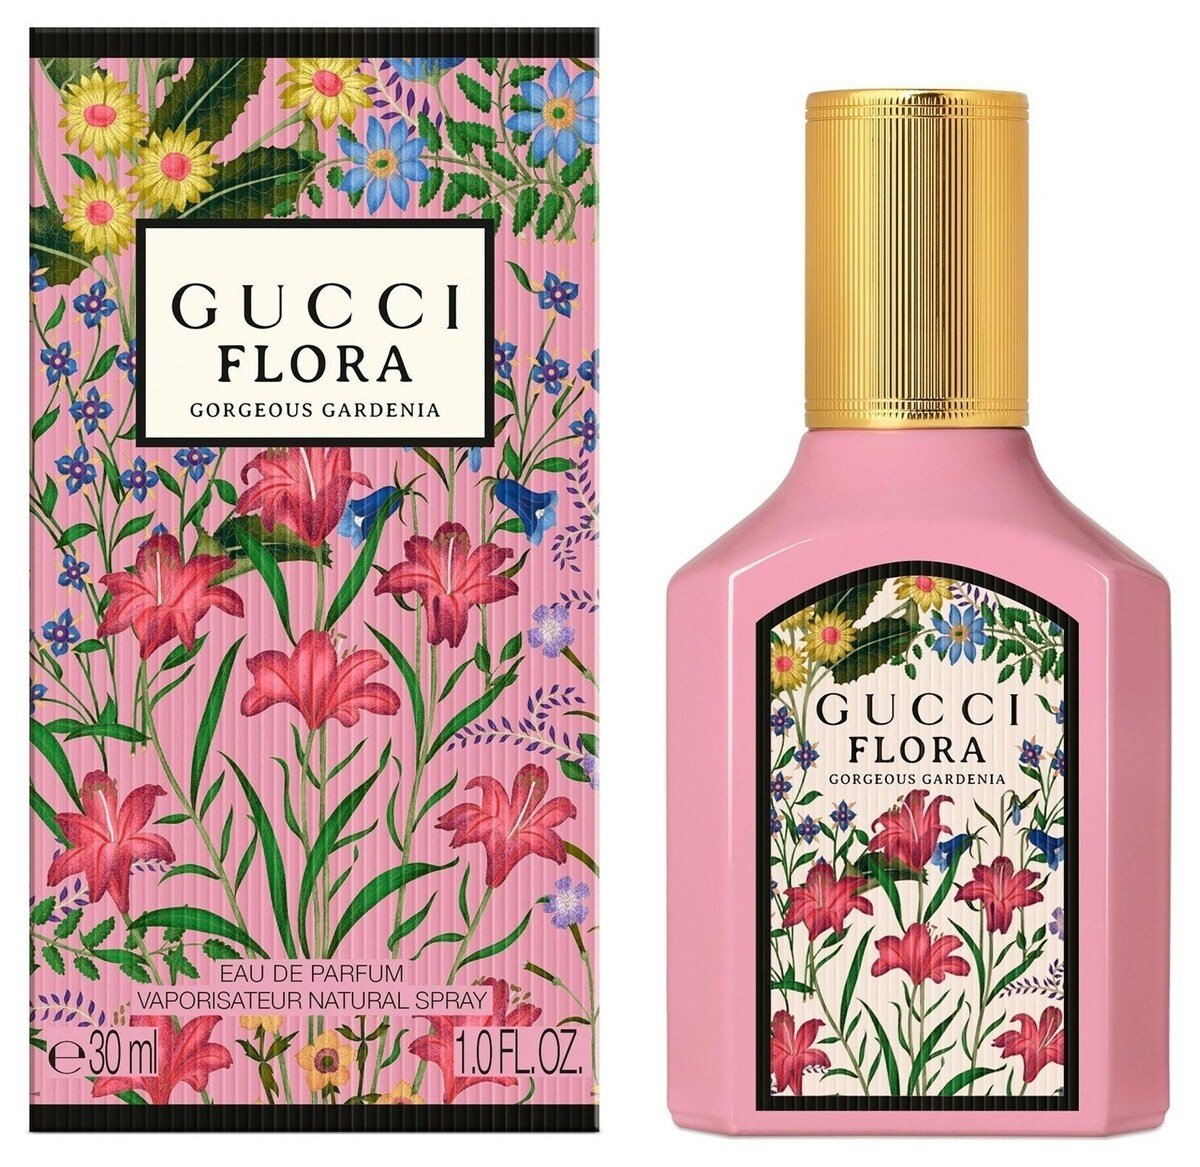 Flora Gorgeous Gardenia Eau de Parfum 2021